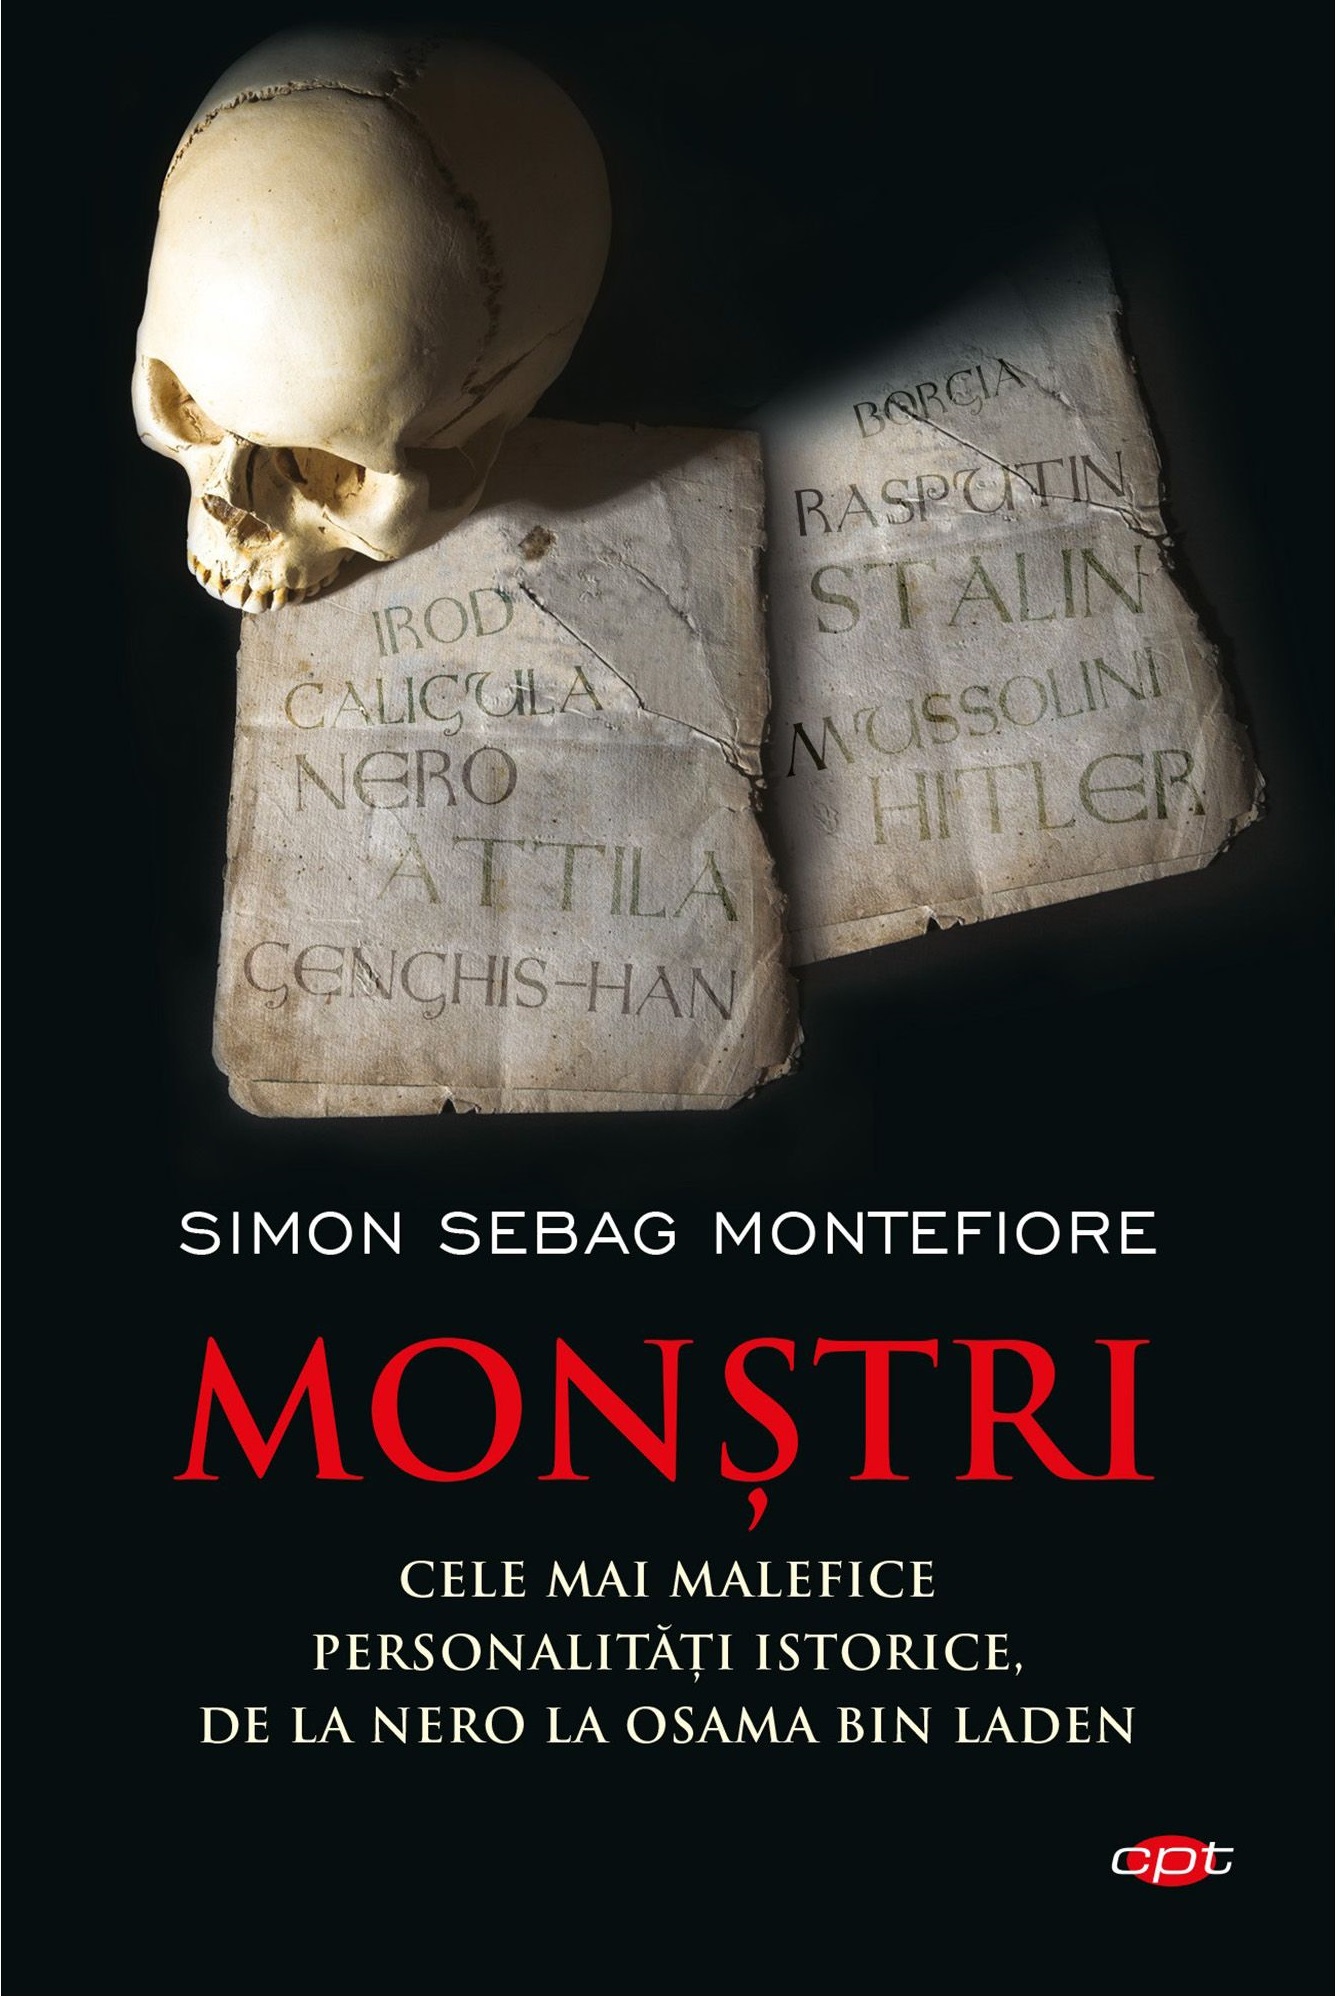 Monstri | Simon Sebag Montefiore